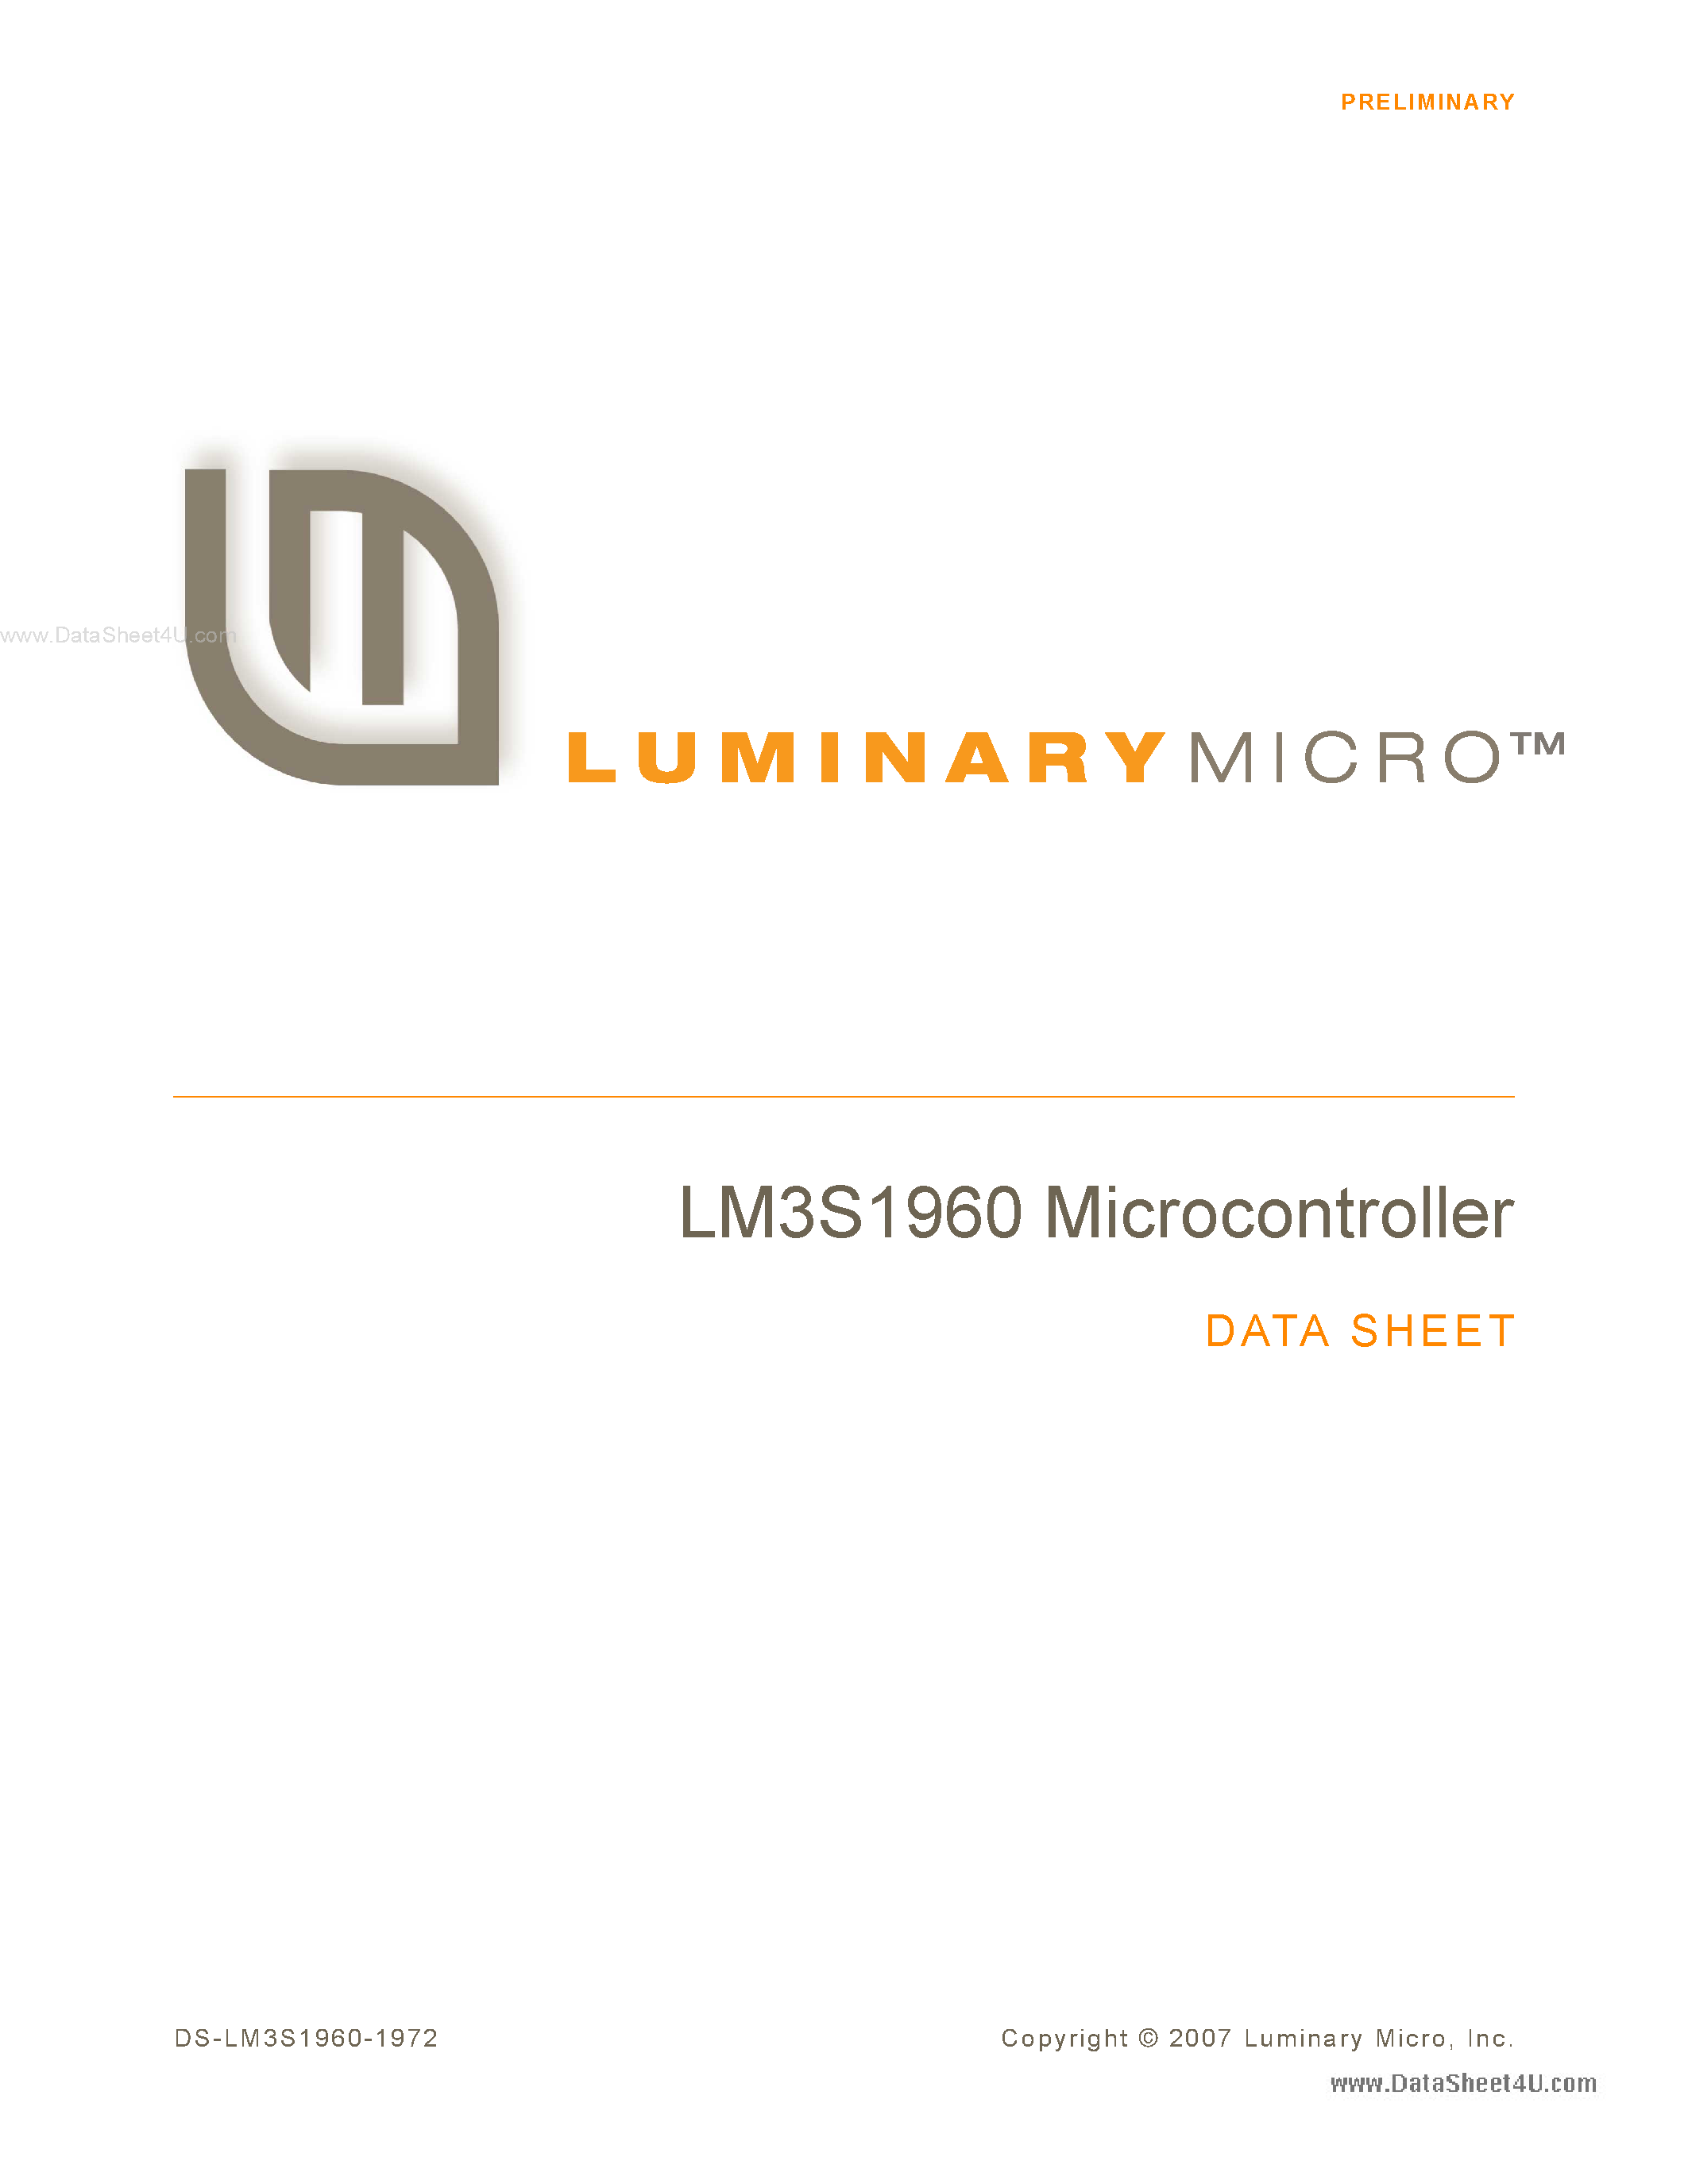 Даташит LM3S1960 - Microcontroller страница 1